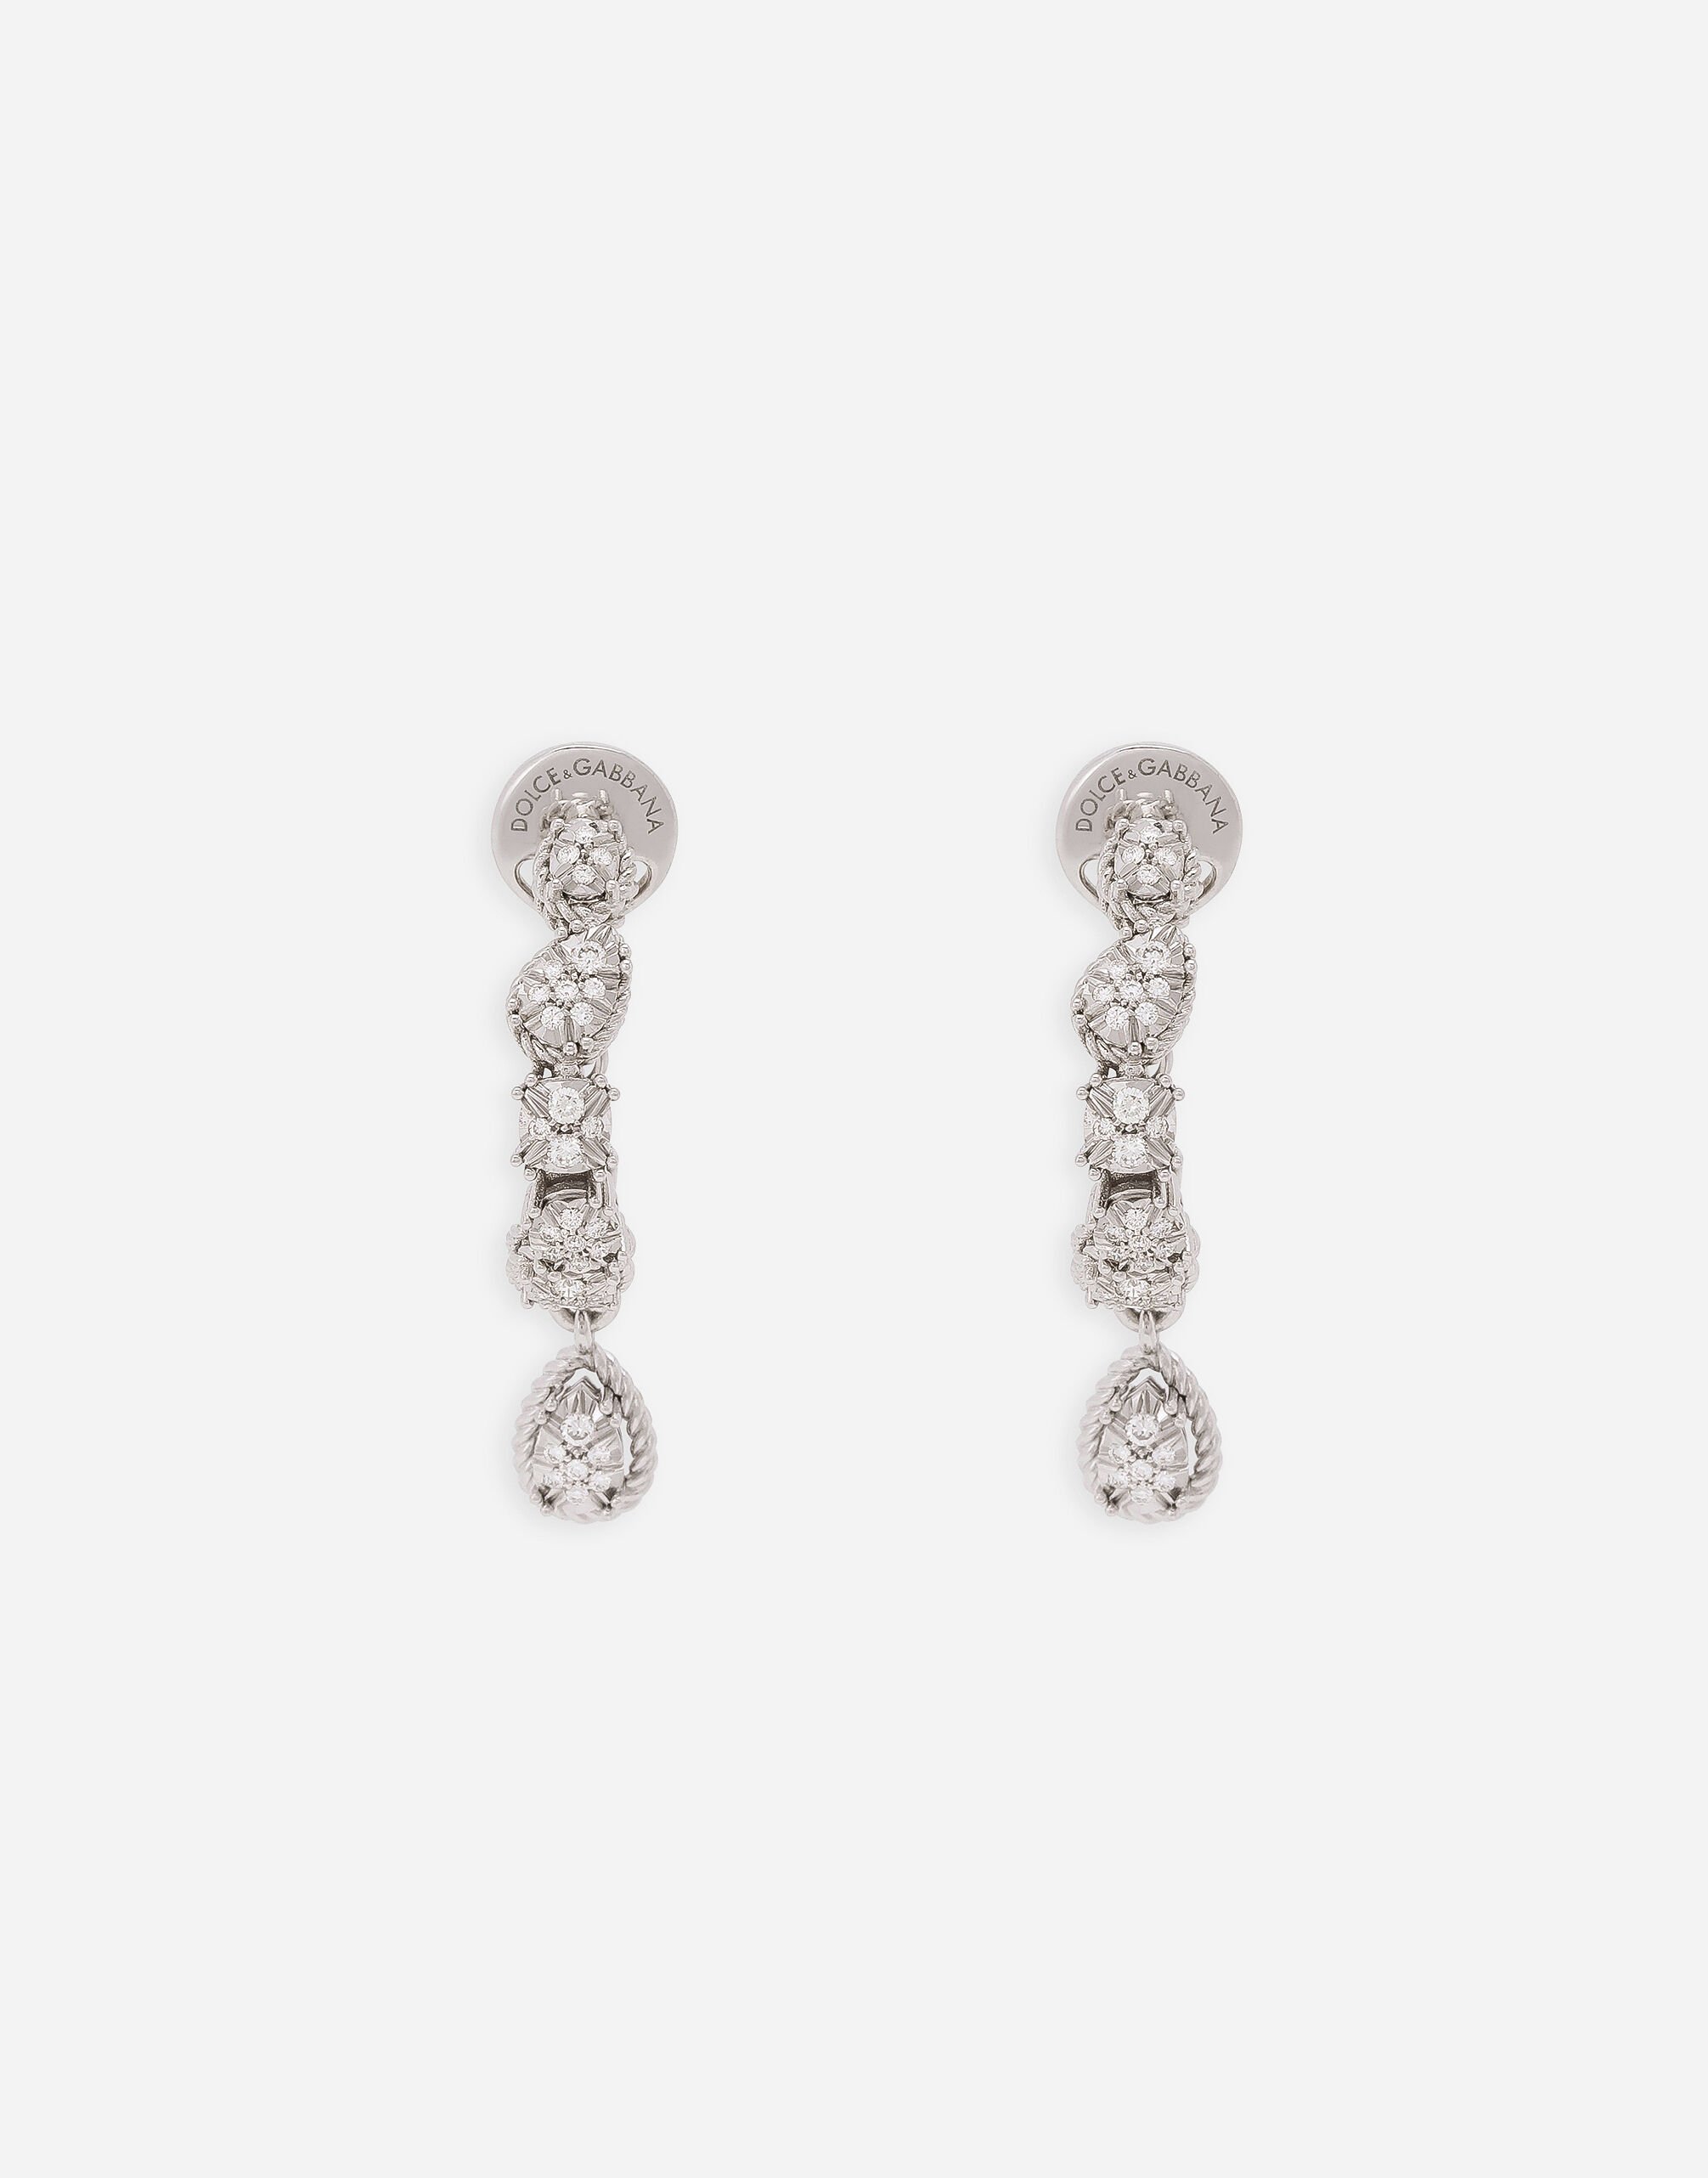 Dolce & Gabbana Easy Diamond earrings in white gold 18kt and diamonds pavé White WEQA1GWSPBL